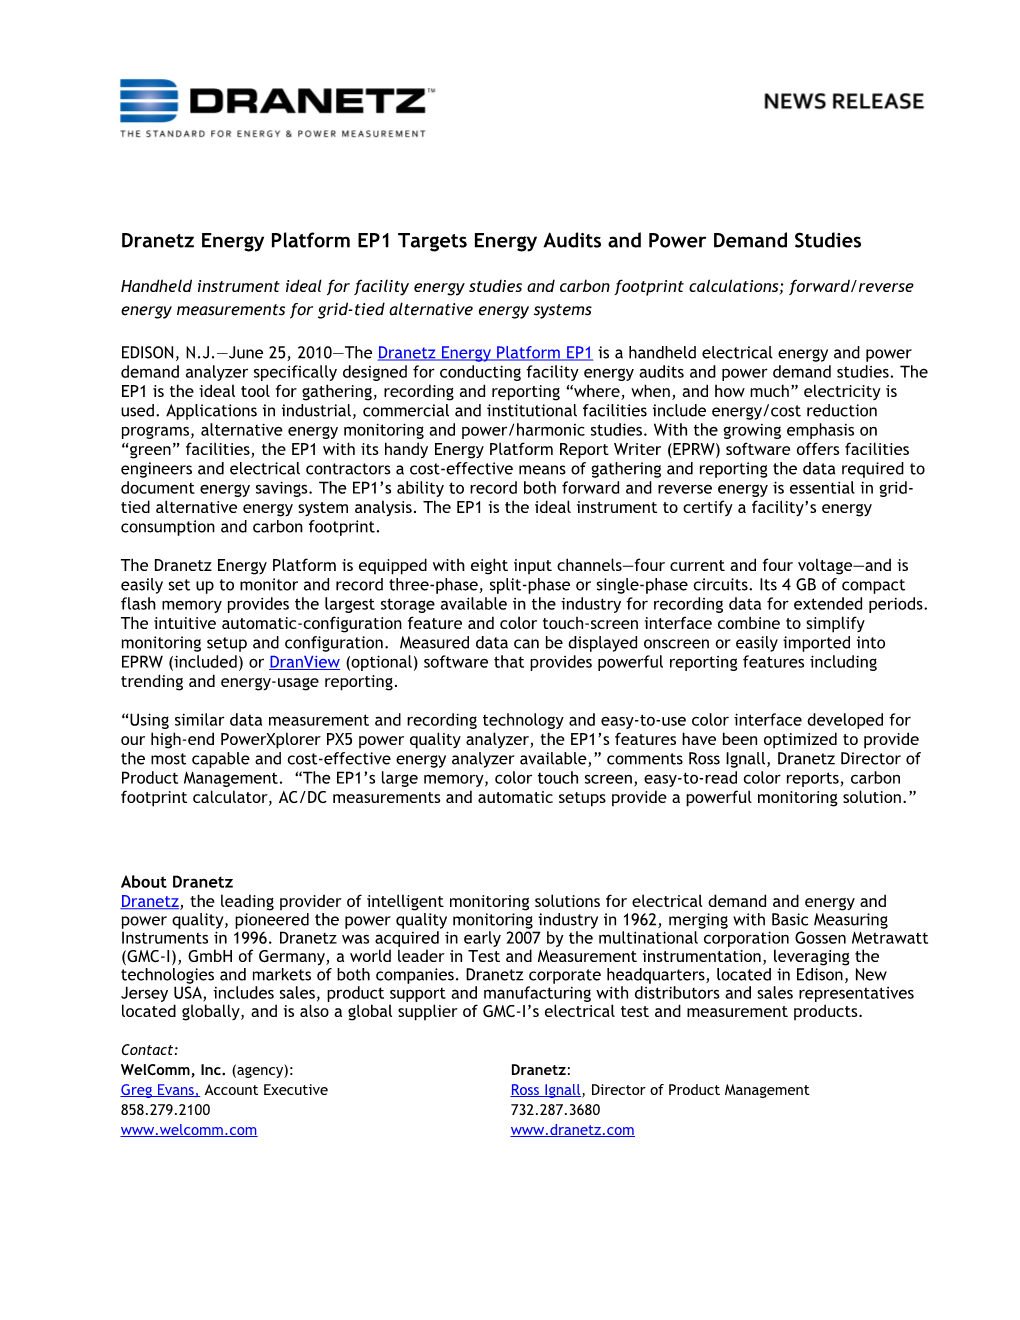 Dranetz Energy Platform EP1 Targets Energy Audits and Power Demand Studies